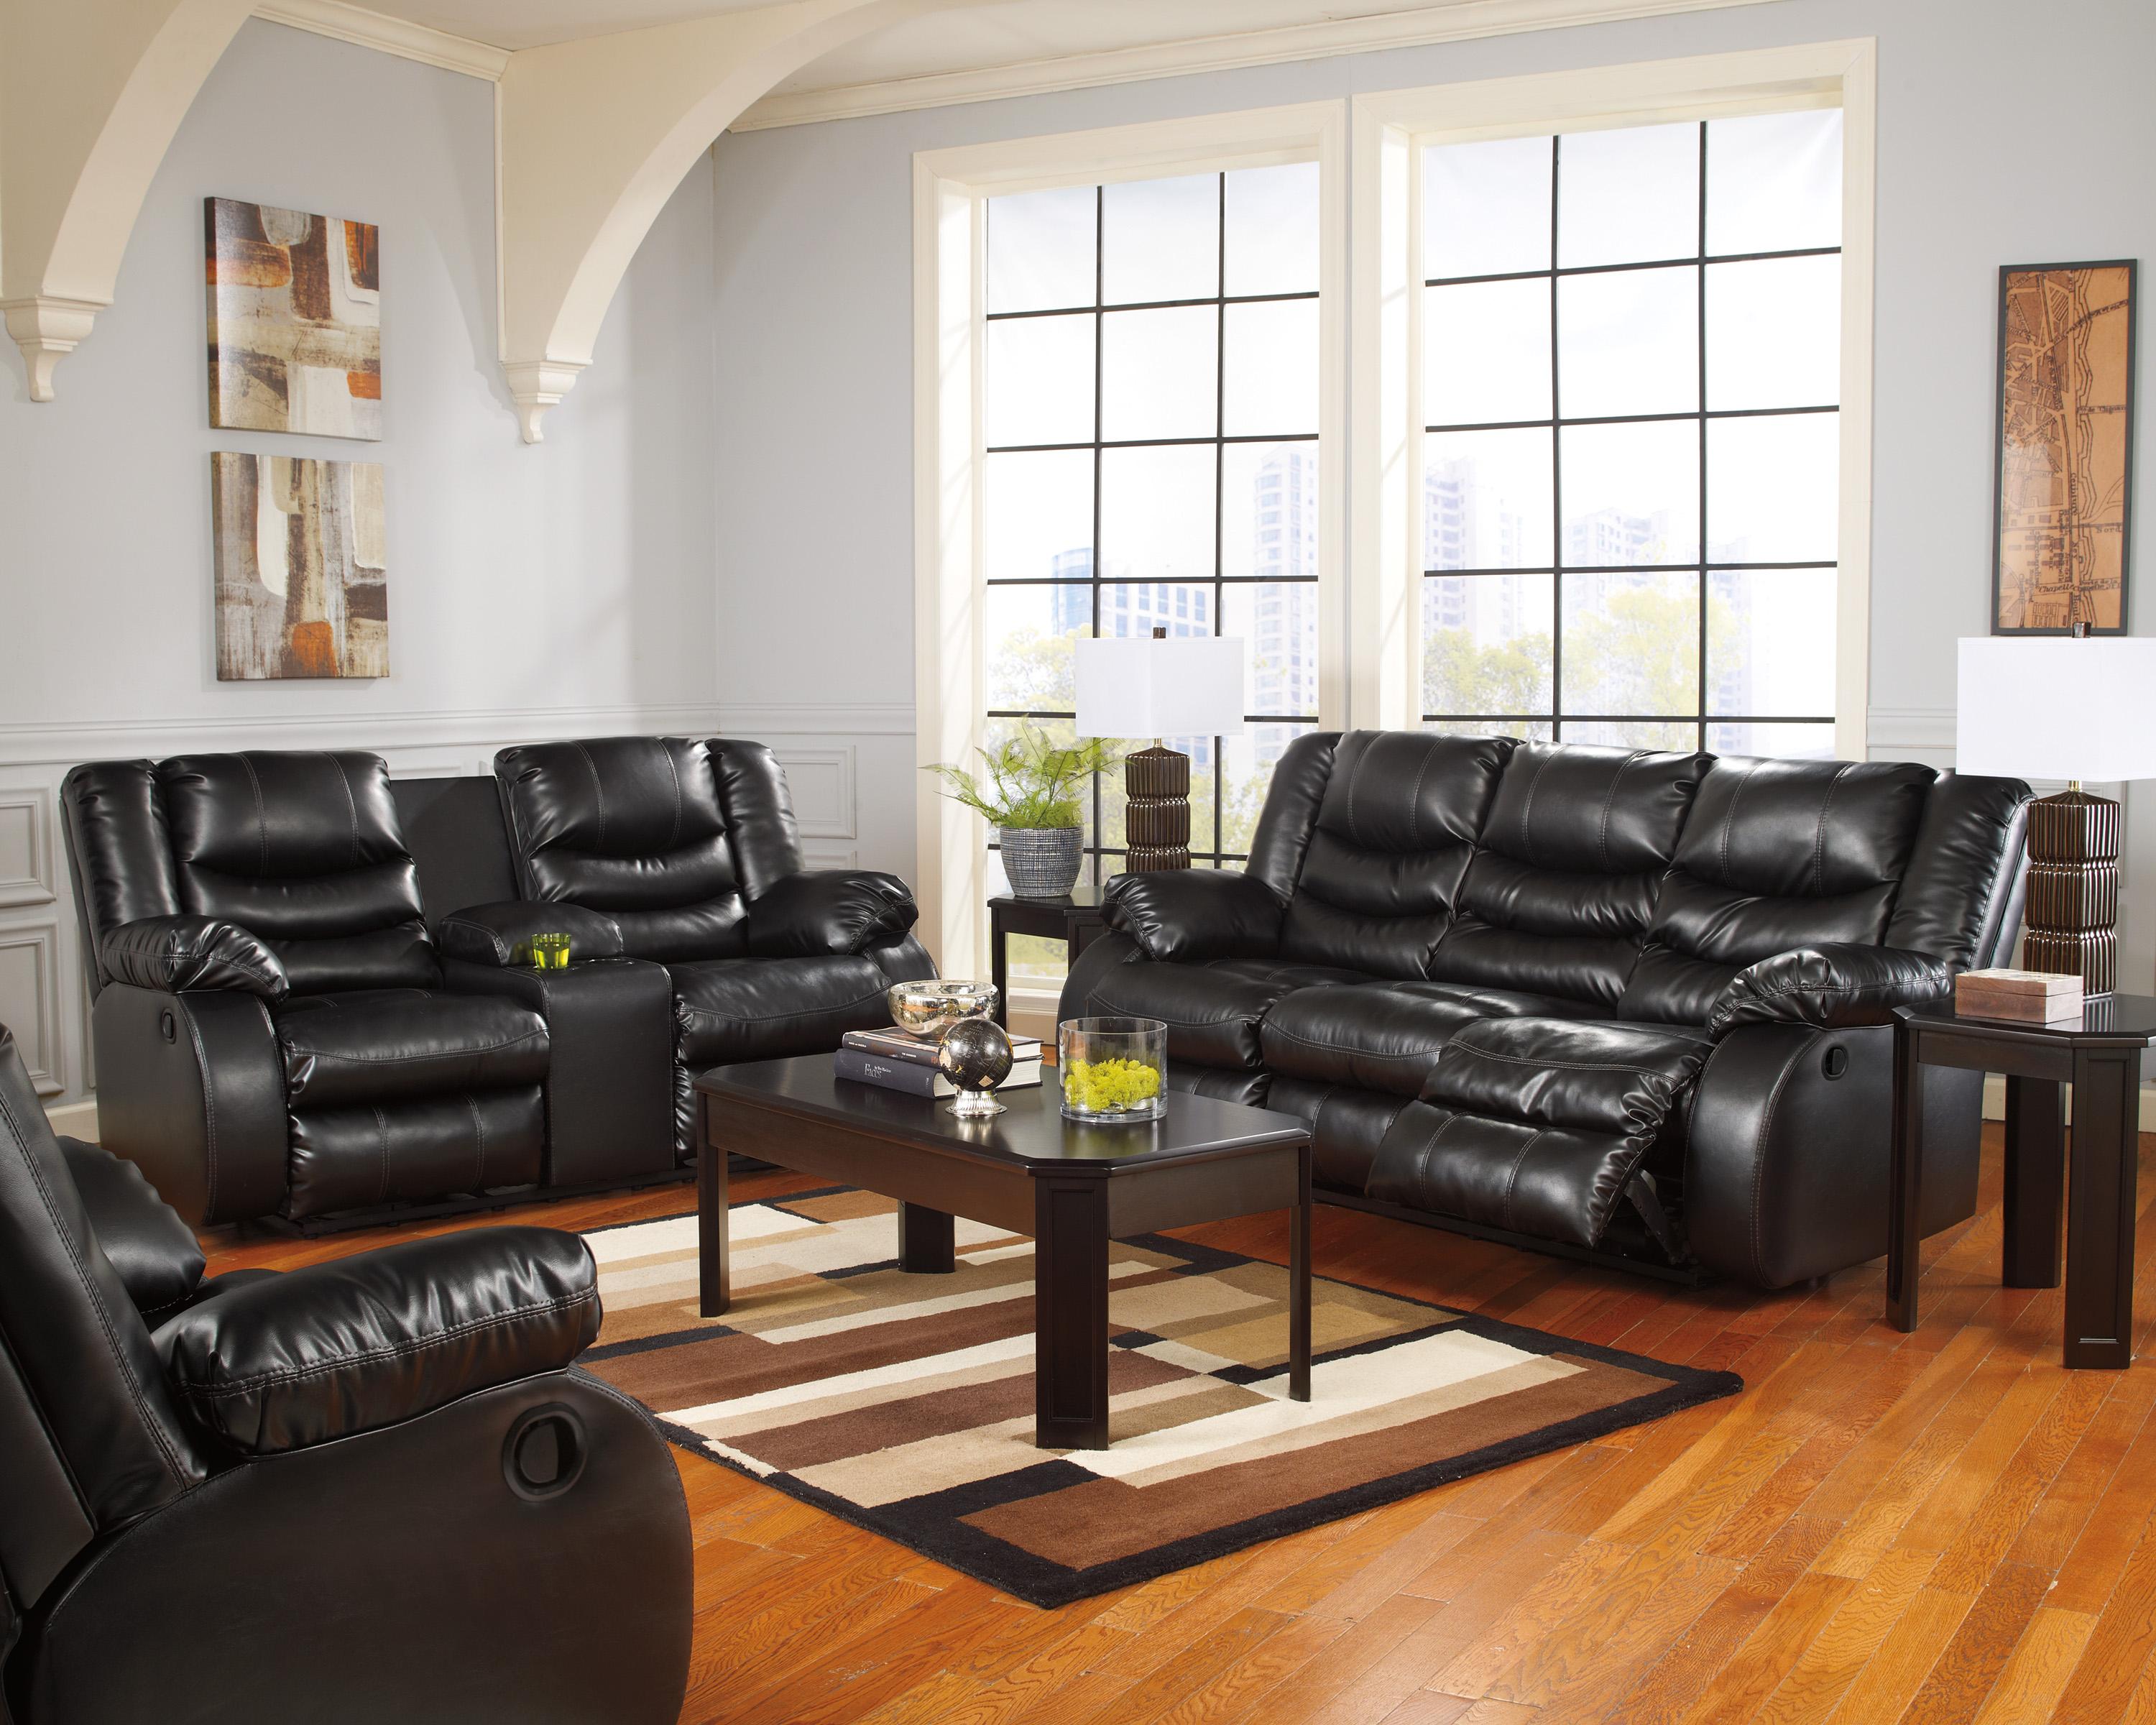 

    
Ashley Linebacker DuraBlend 3 Piece Living Room Set in Black 2395
